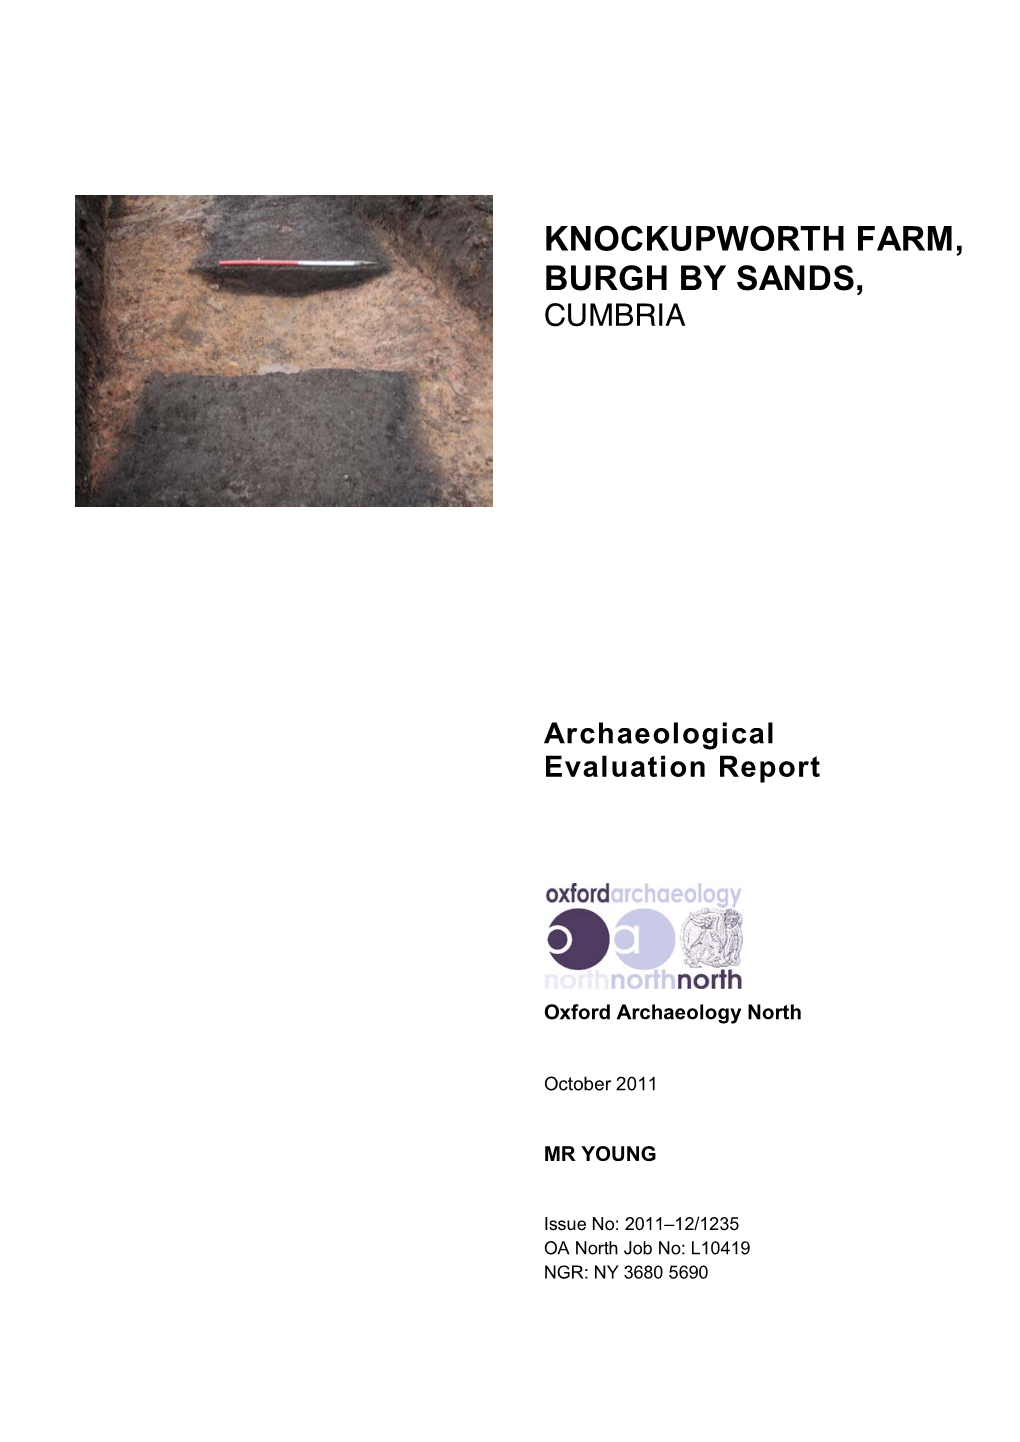 Knockupworth Farm, Burgh by Sands, Cumbria